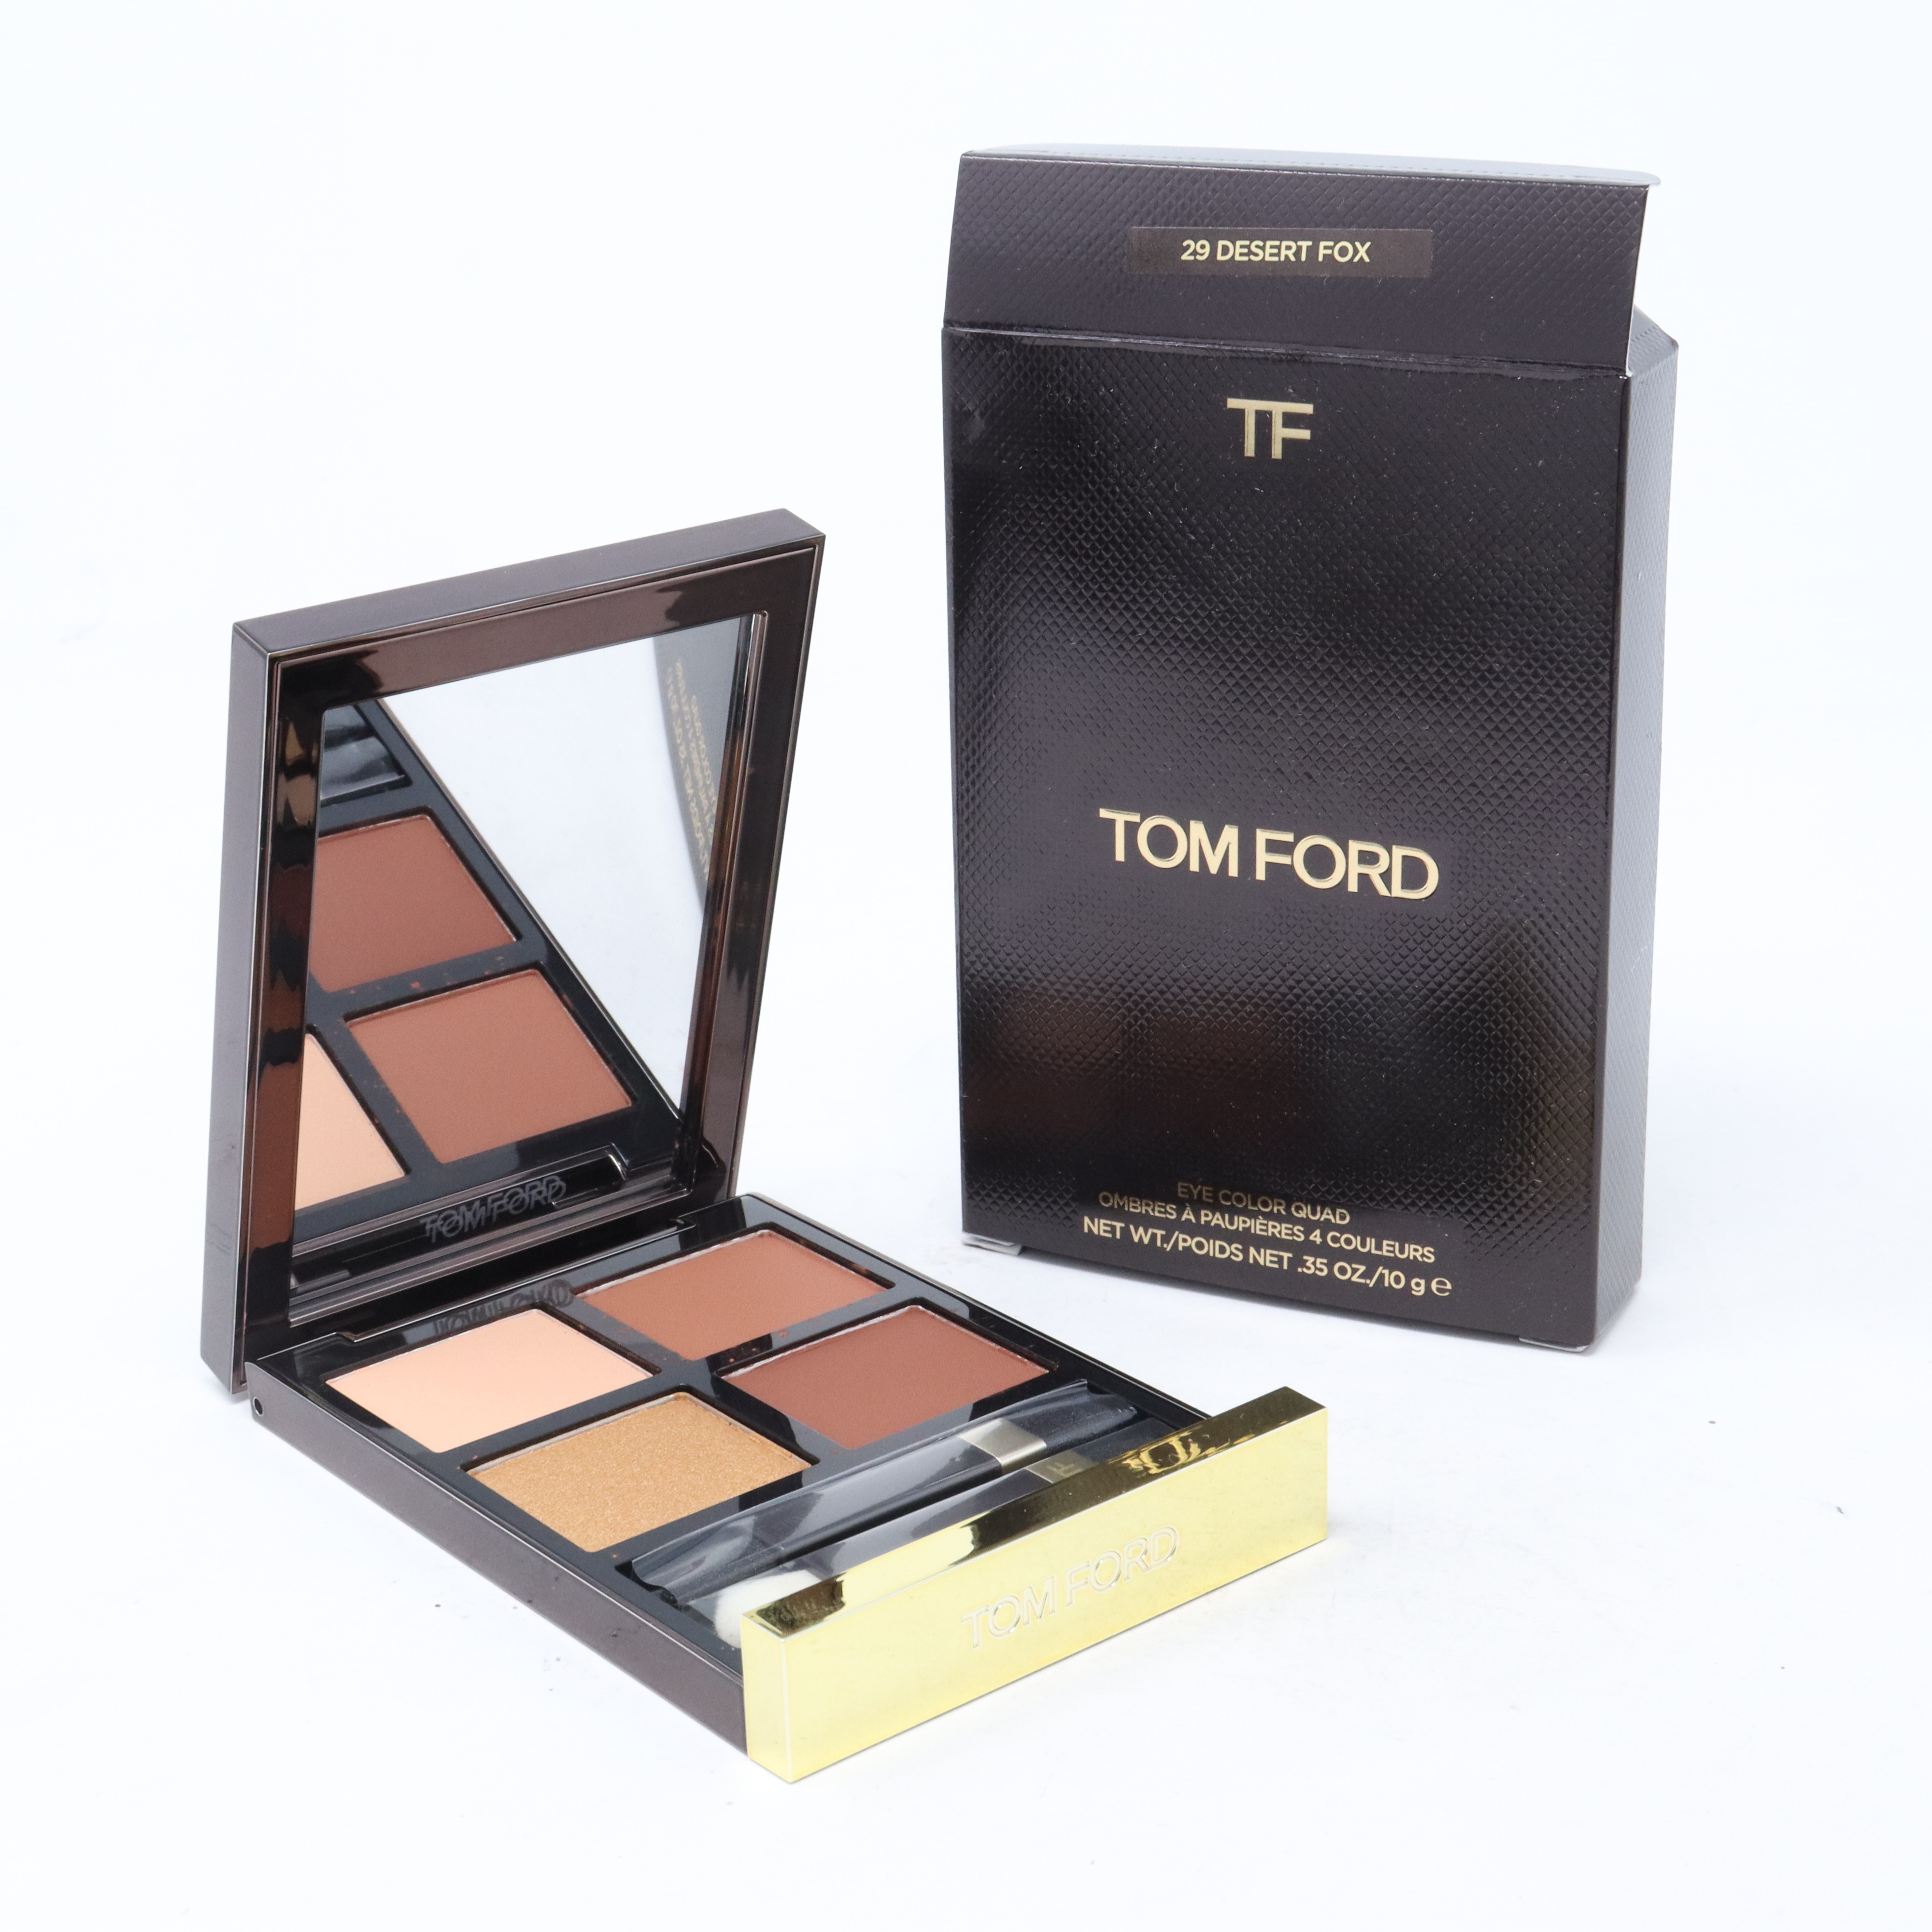 Tom Ford Eye Color Quad /10g New In Box | eBay